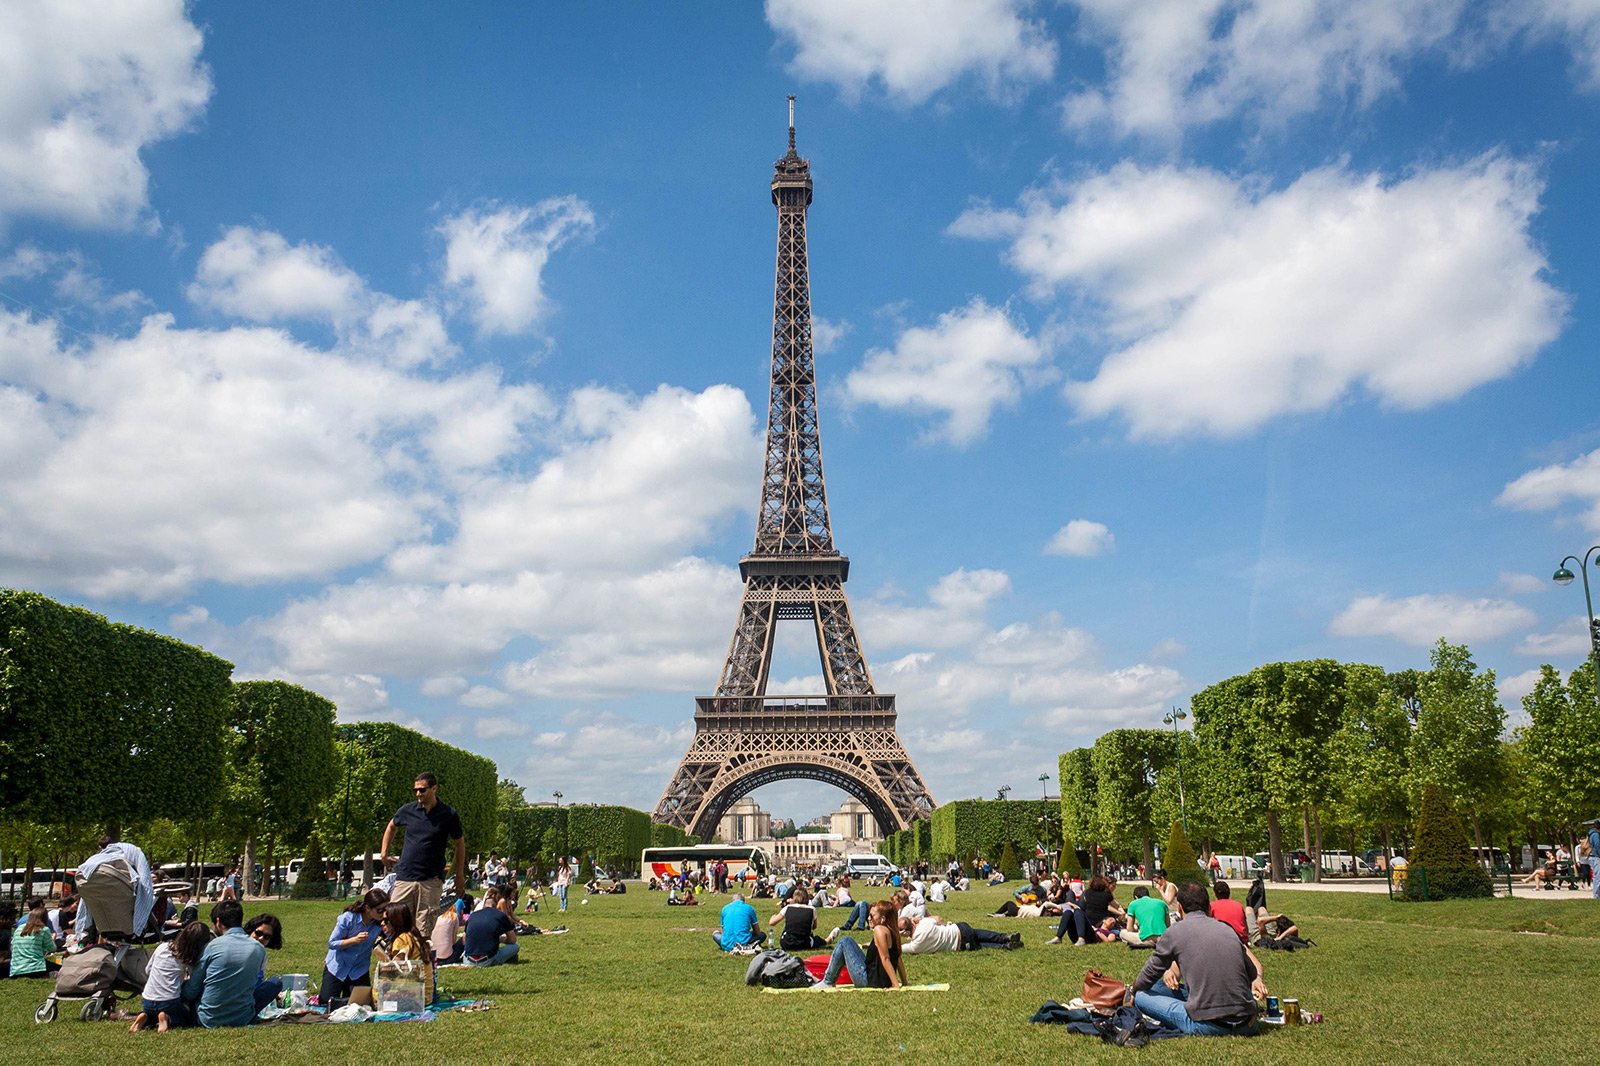 Эйфелева башня снова открыта дня туристов - Фото